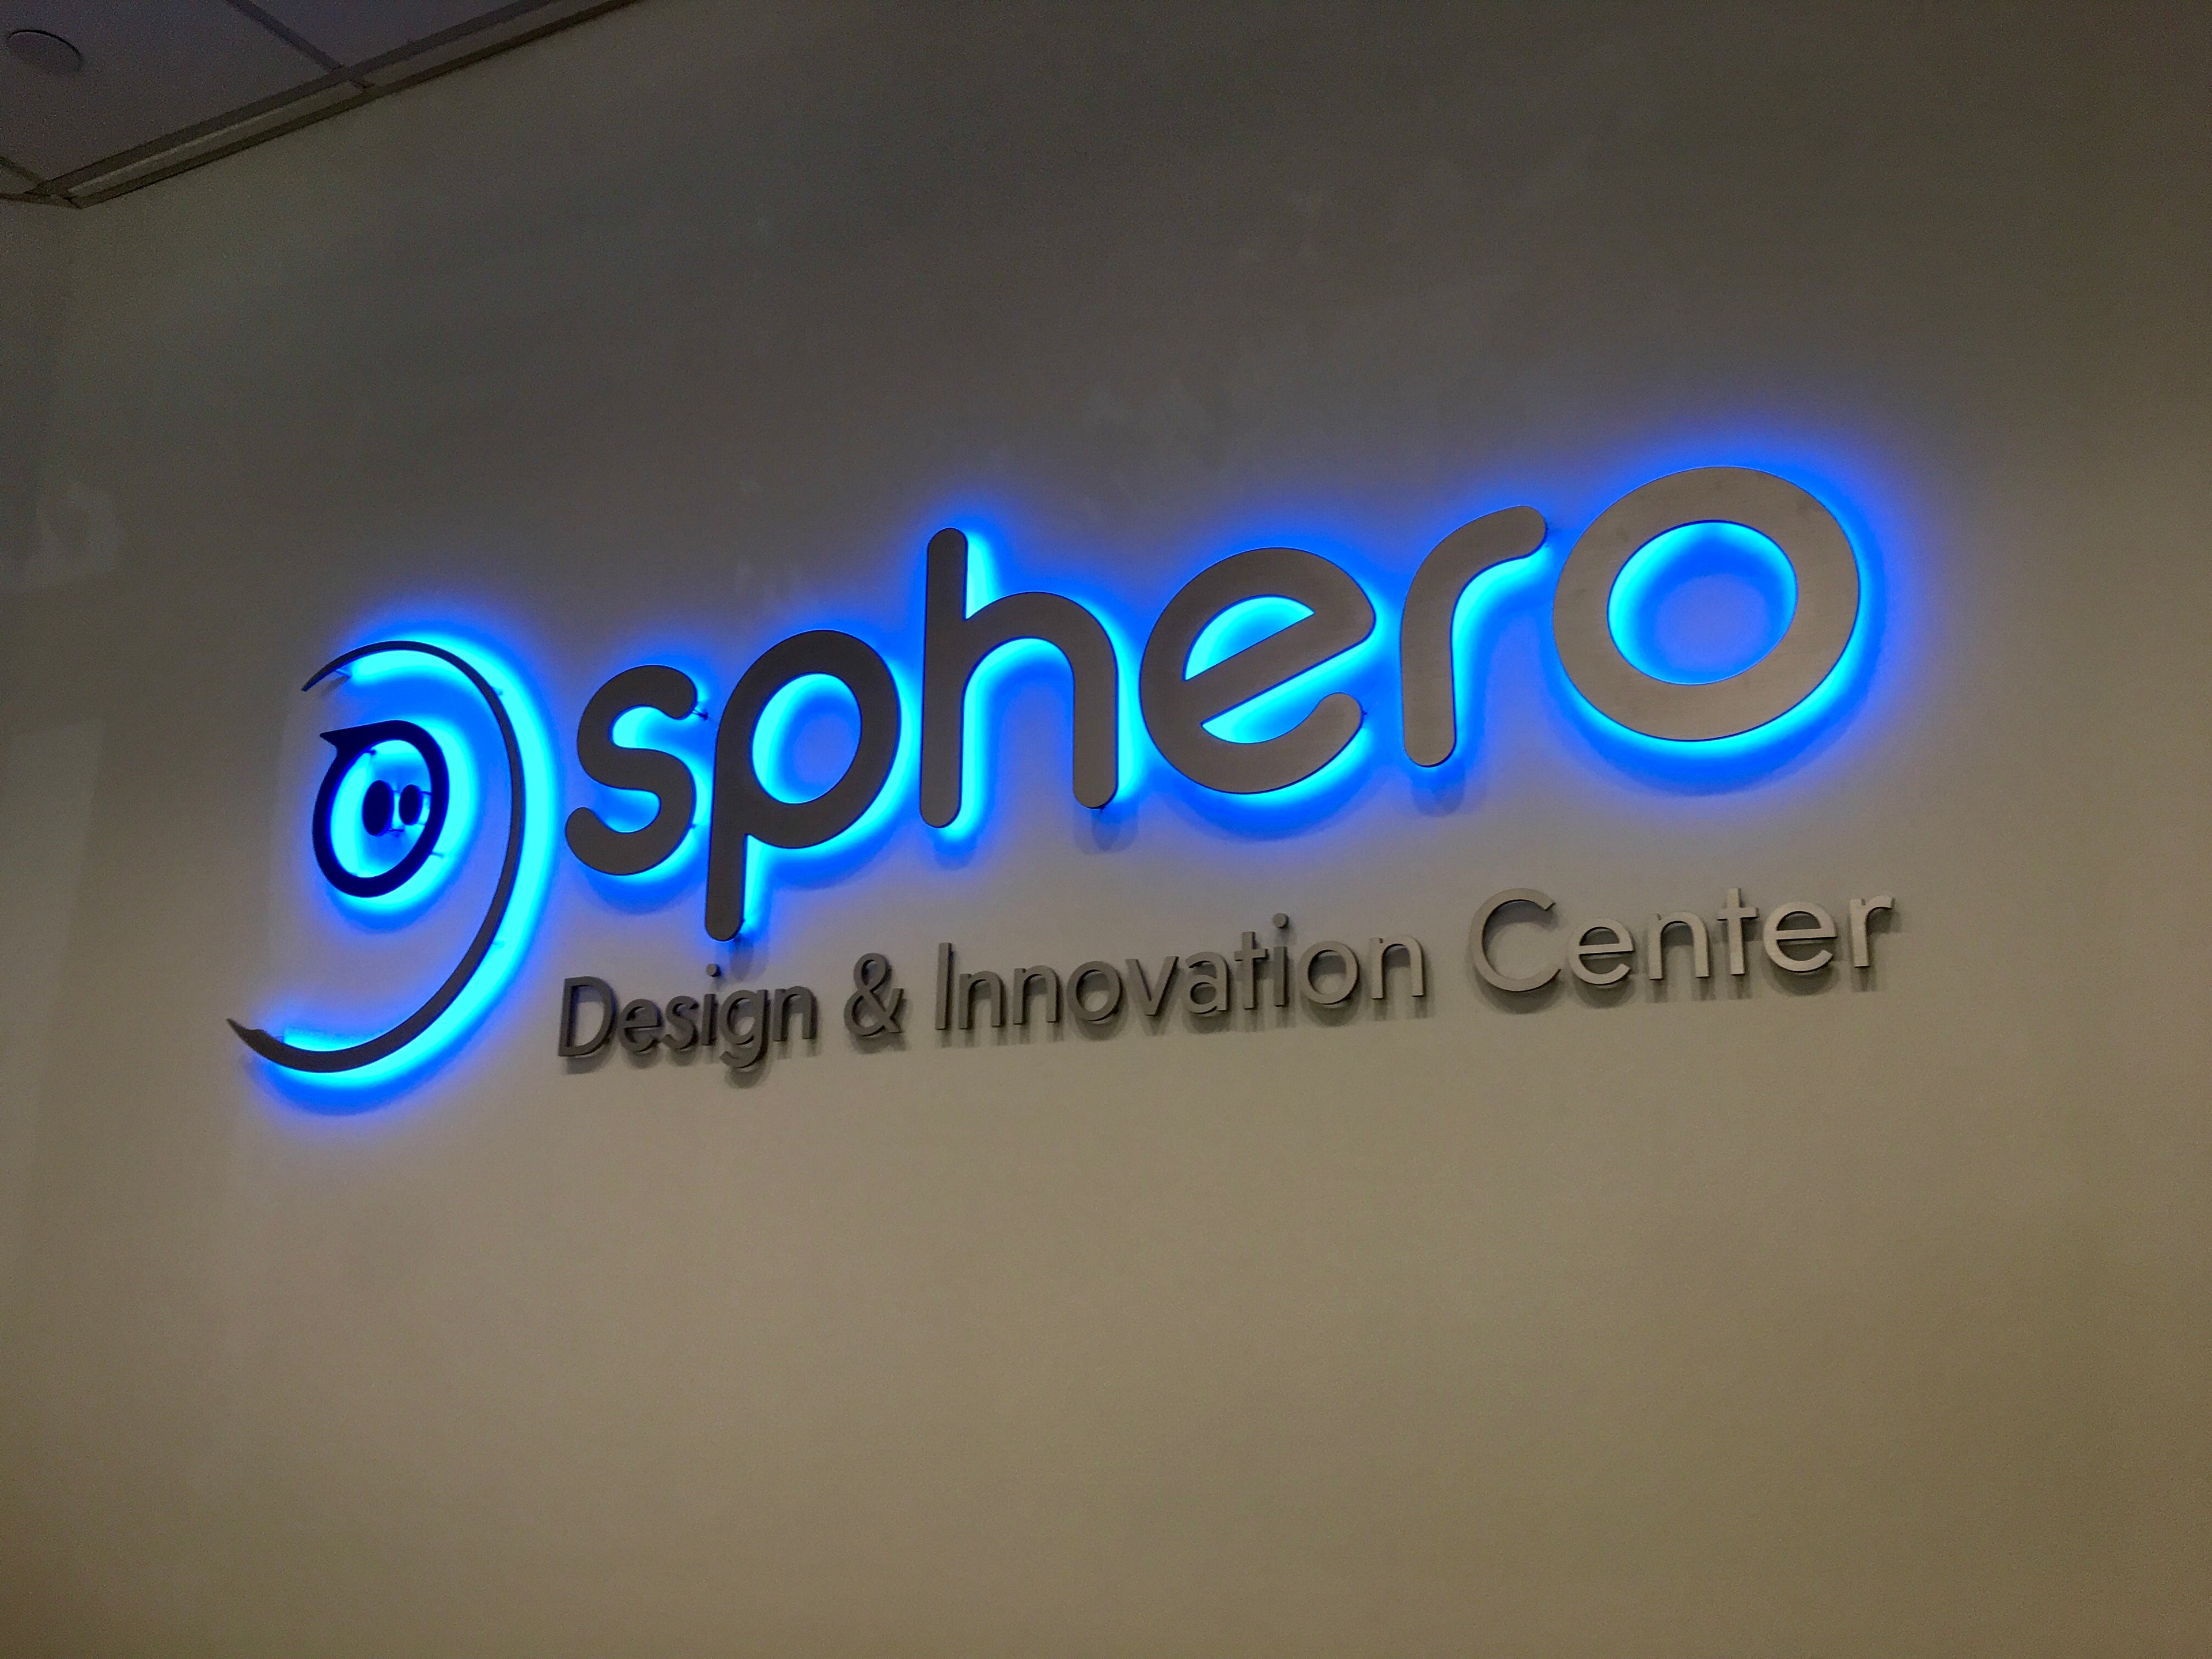 Custom made interior business sign for Sphero Design and Innovation Center in Boulder, Colorado.